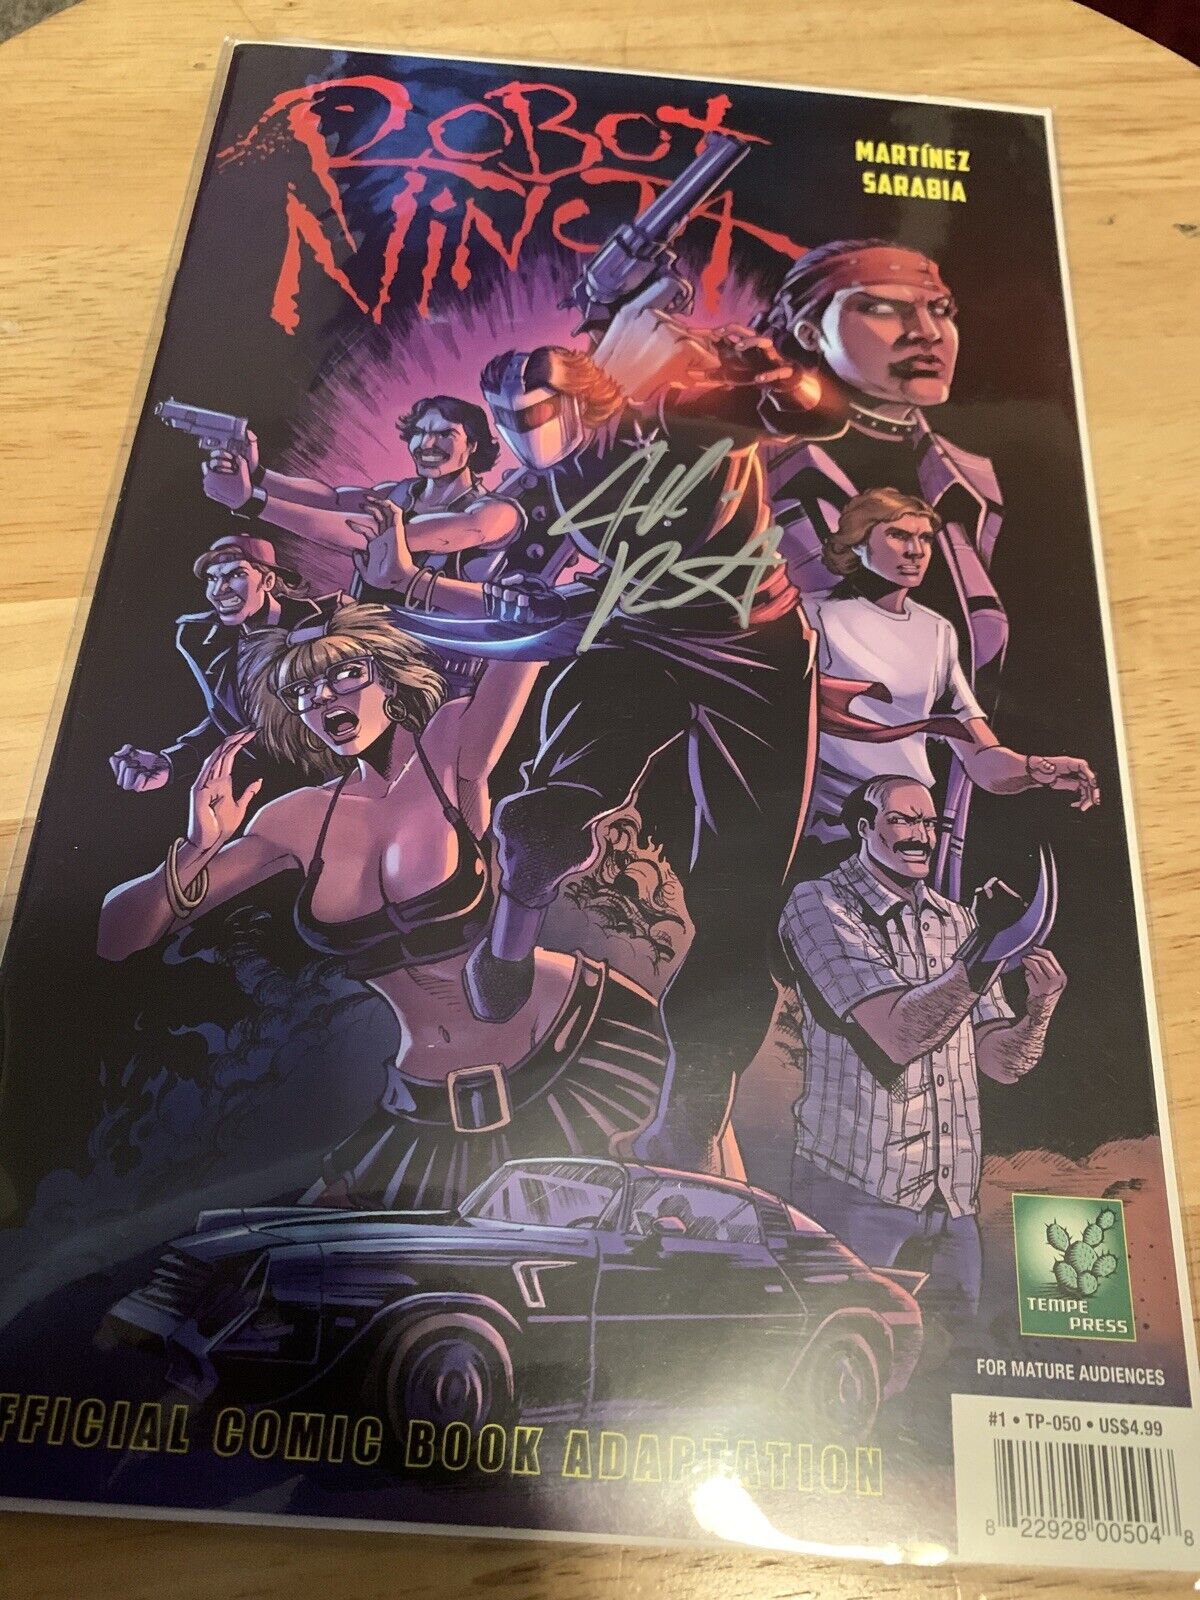 Signed Robot Ninja (Official Comic Book Adaptation).